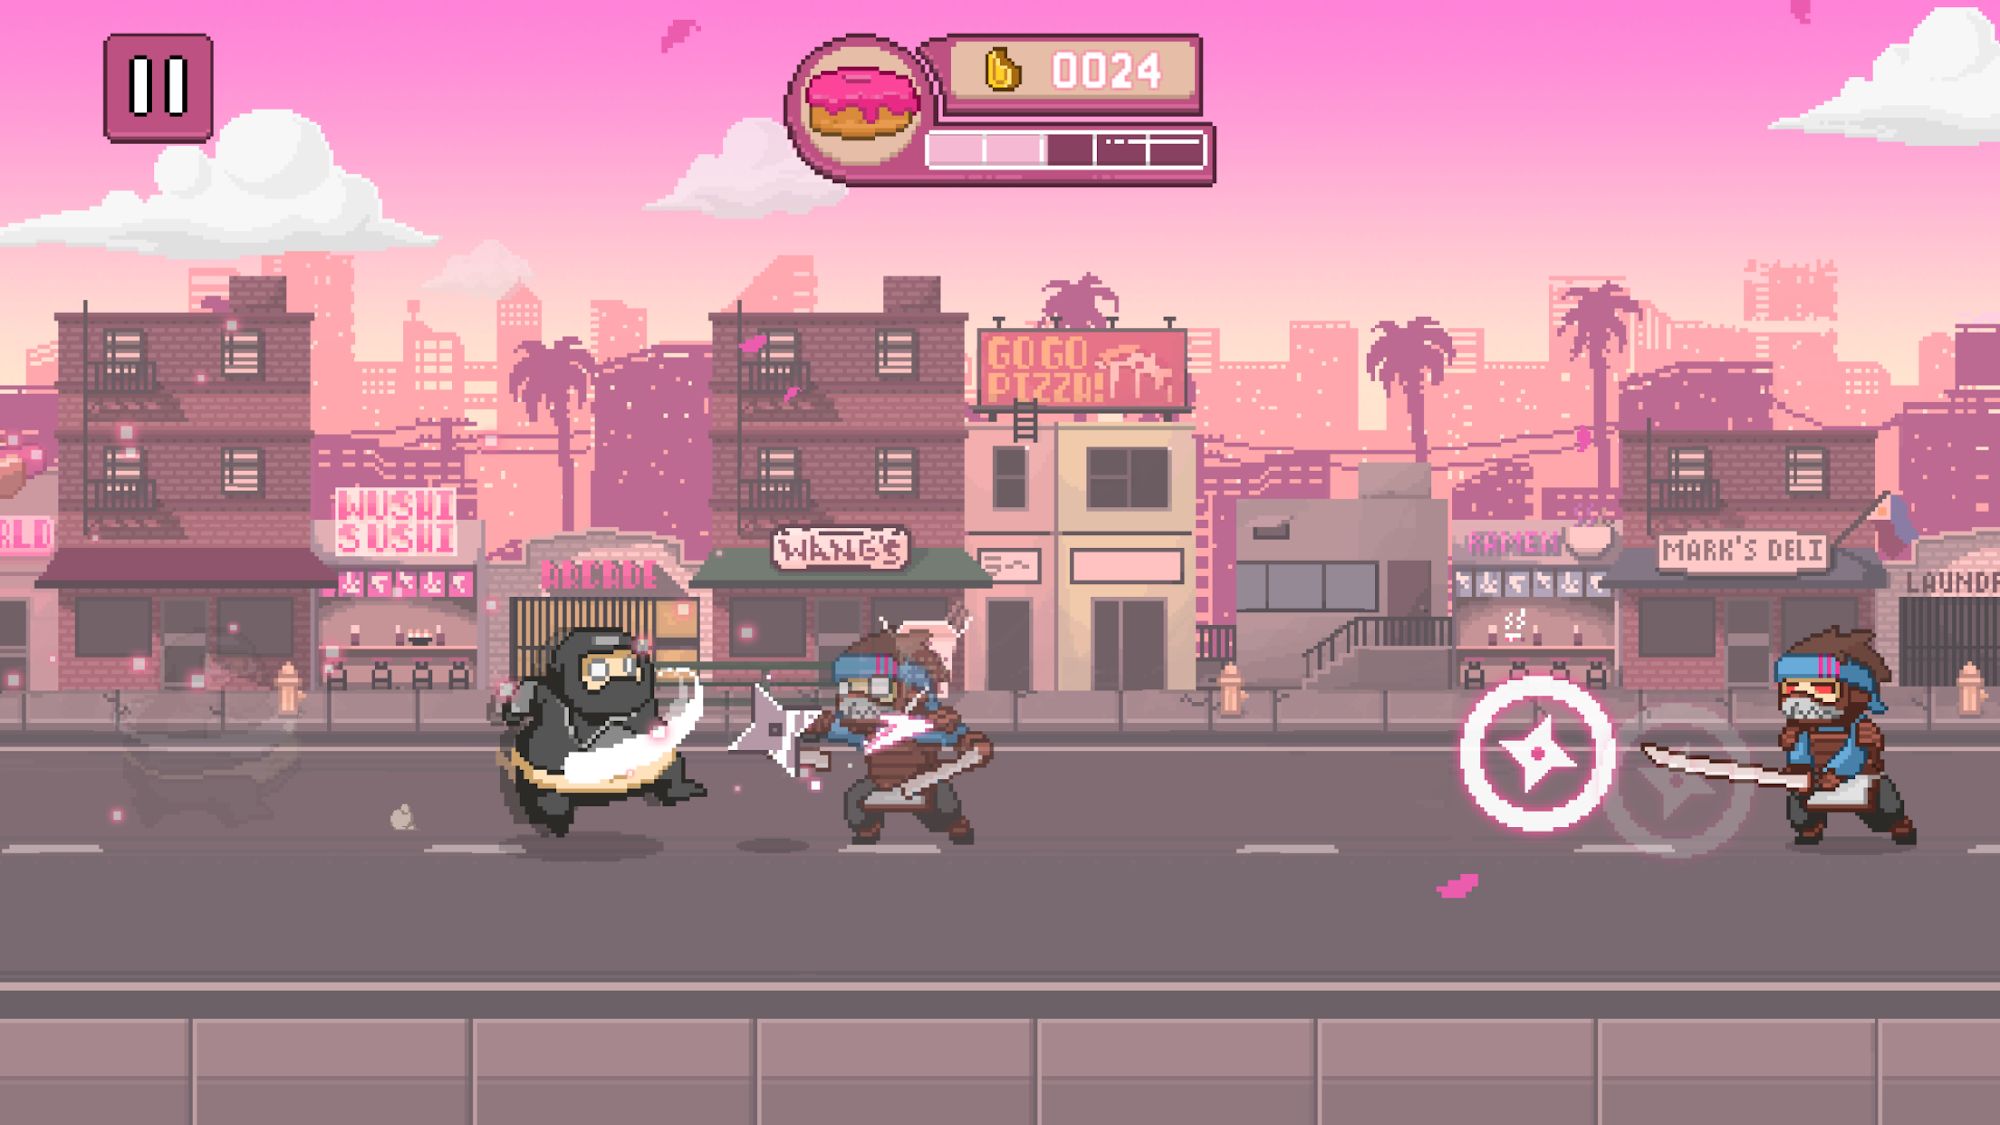 Ninja Chowdown - Android game screenshots.